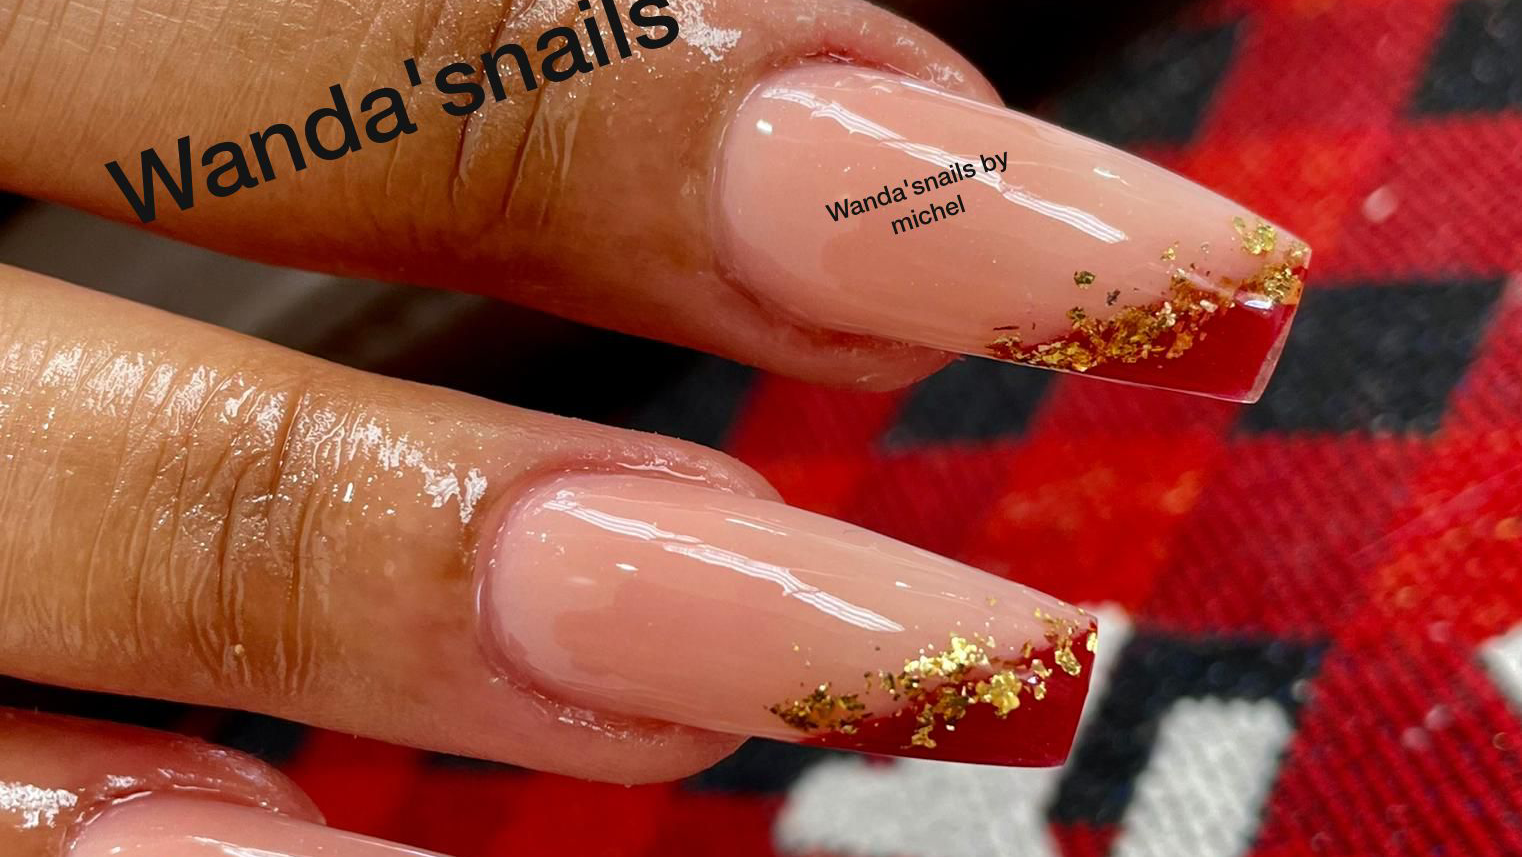 Wanda's Nails